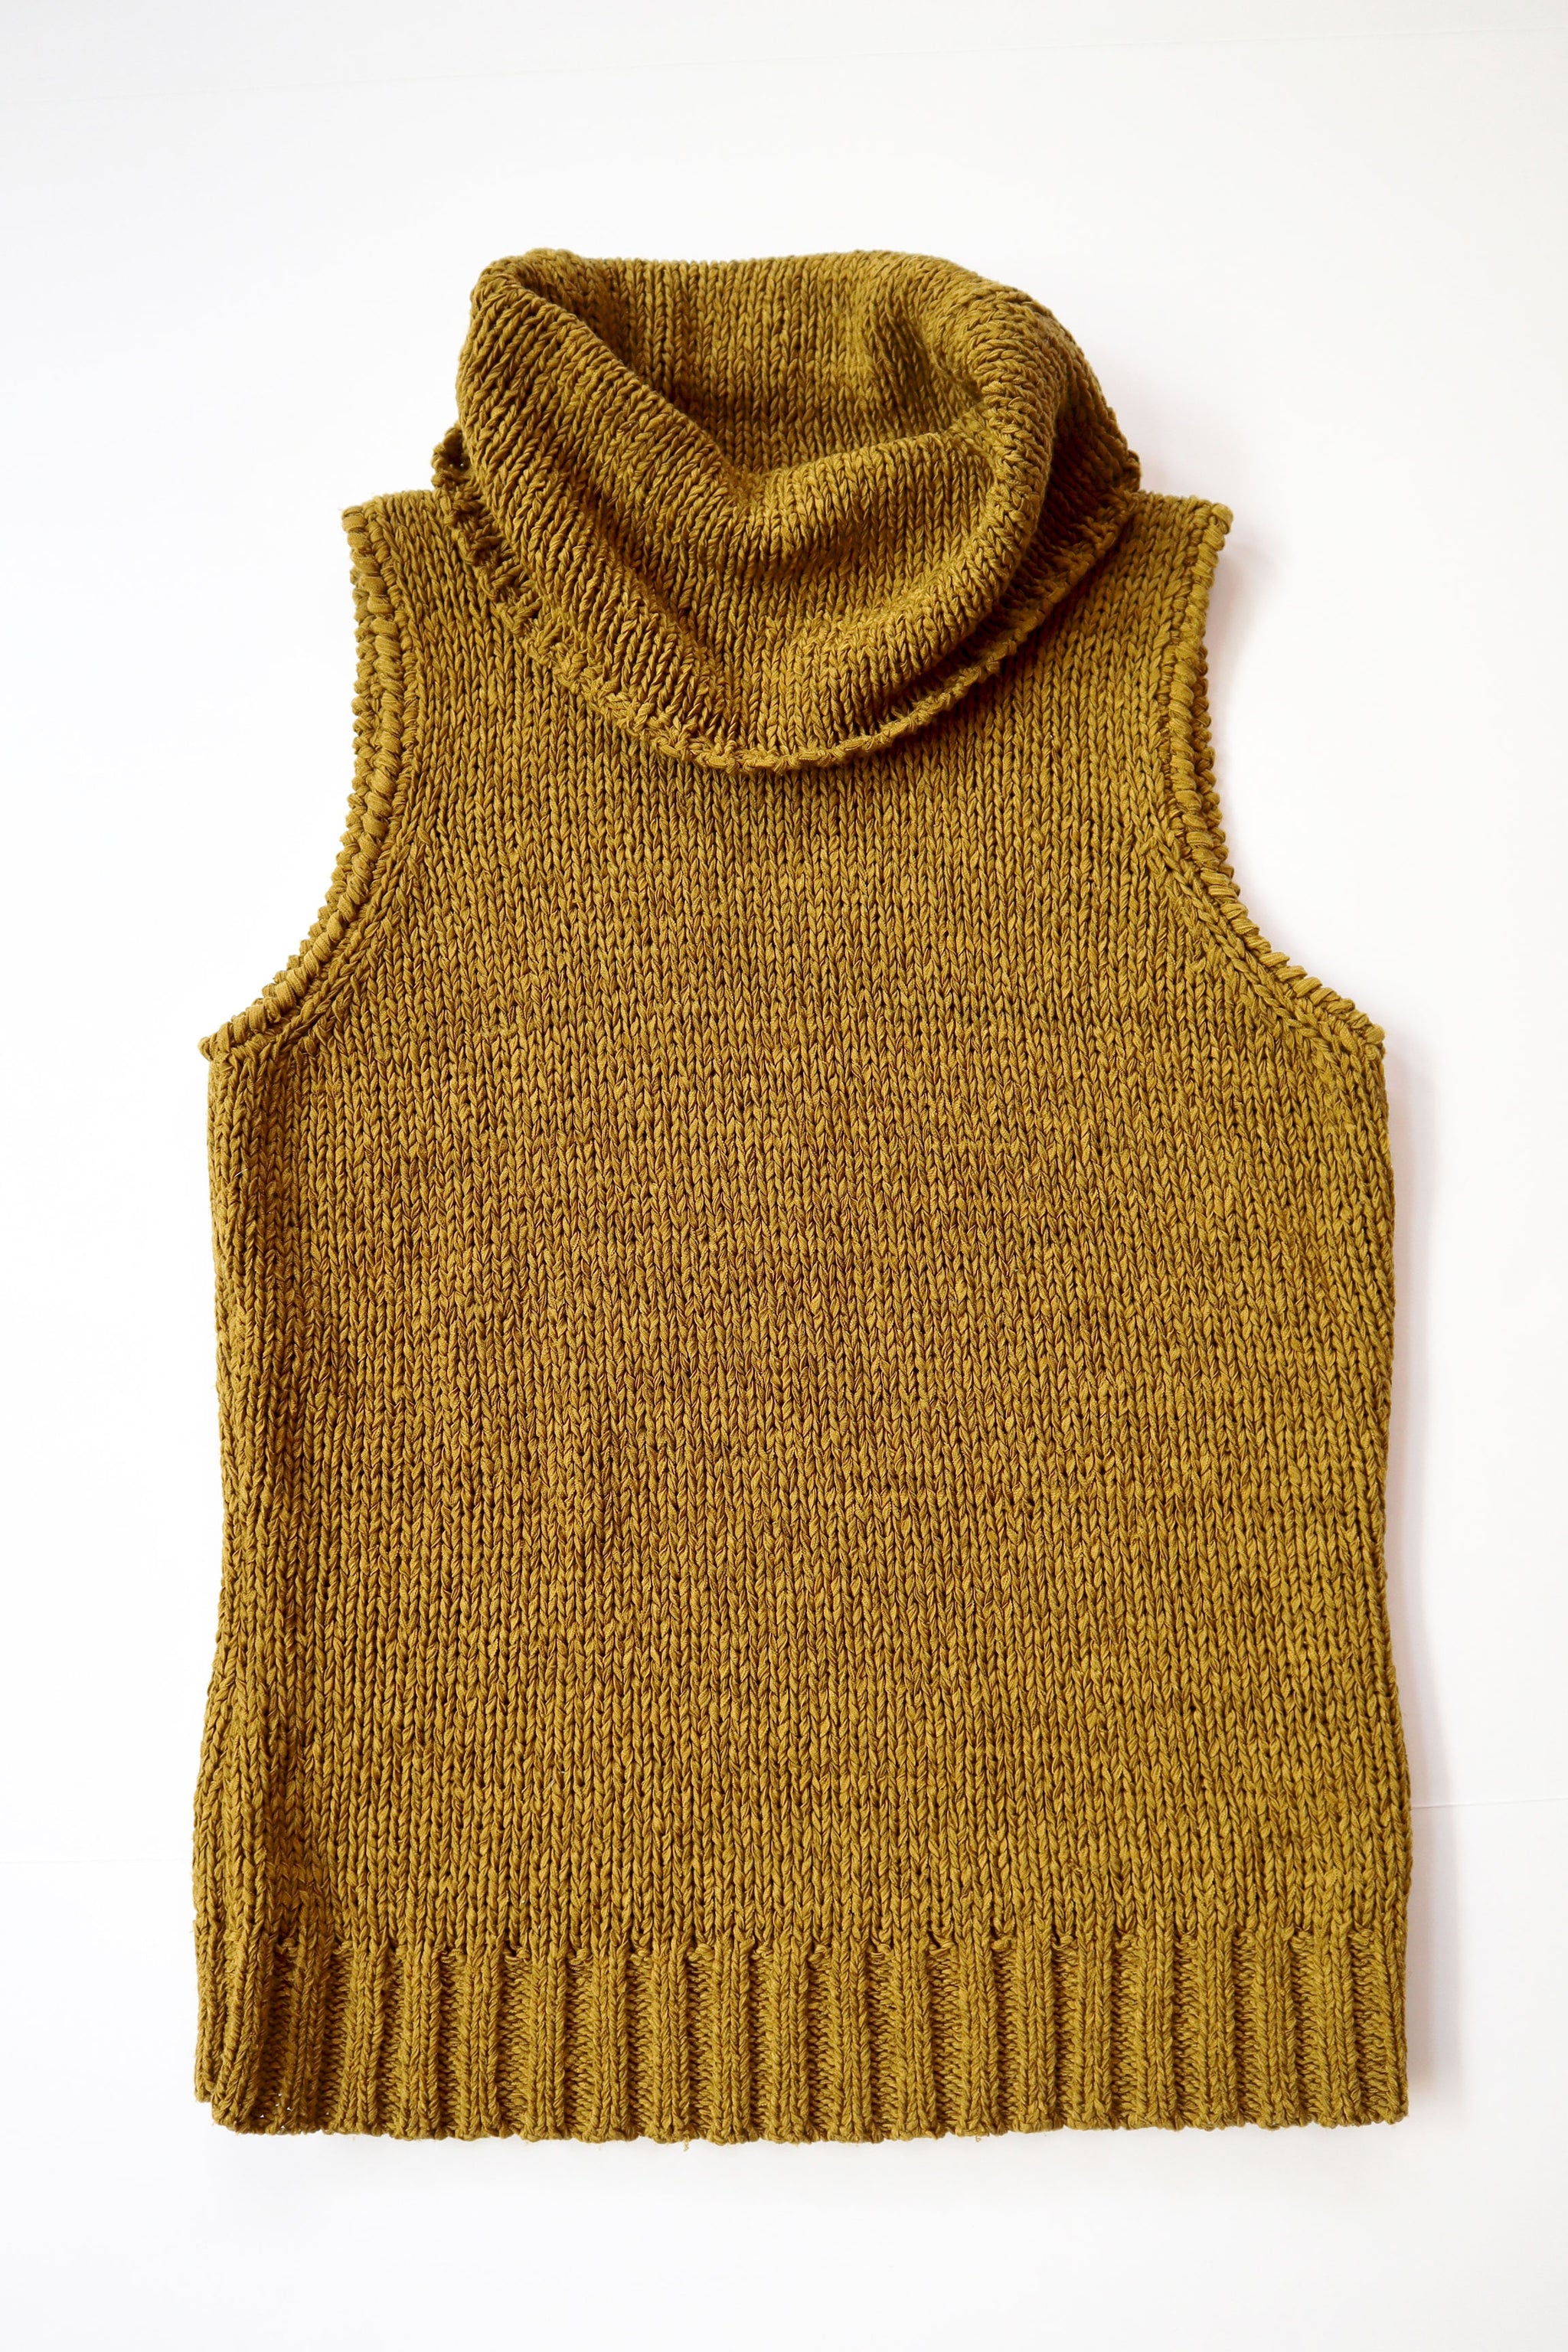 Jones NY Pea Green Woven Knit Sleeveless Turtleneck Sweater